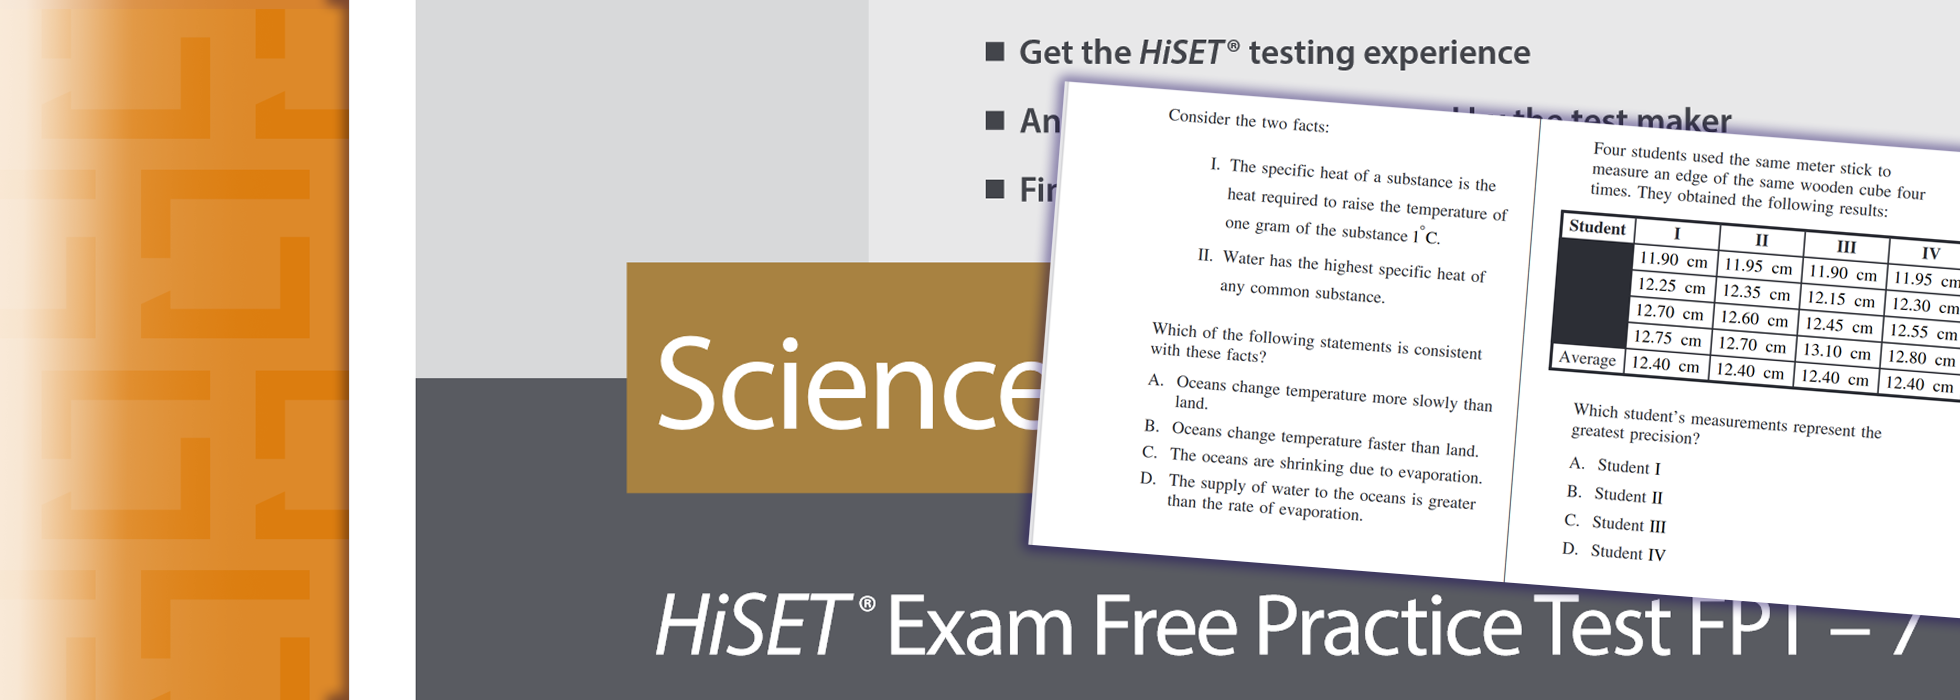 hiset practice test essay